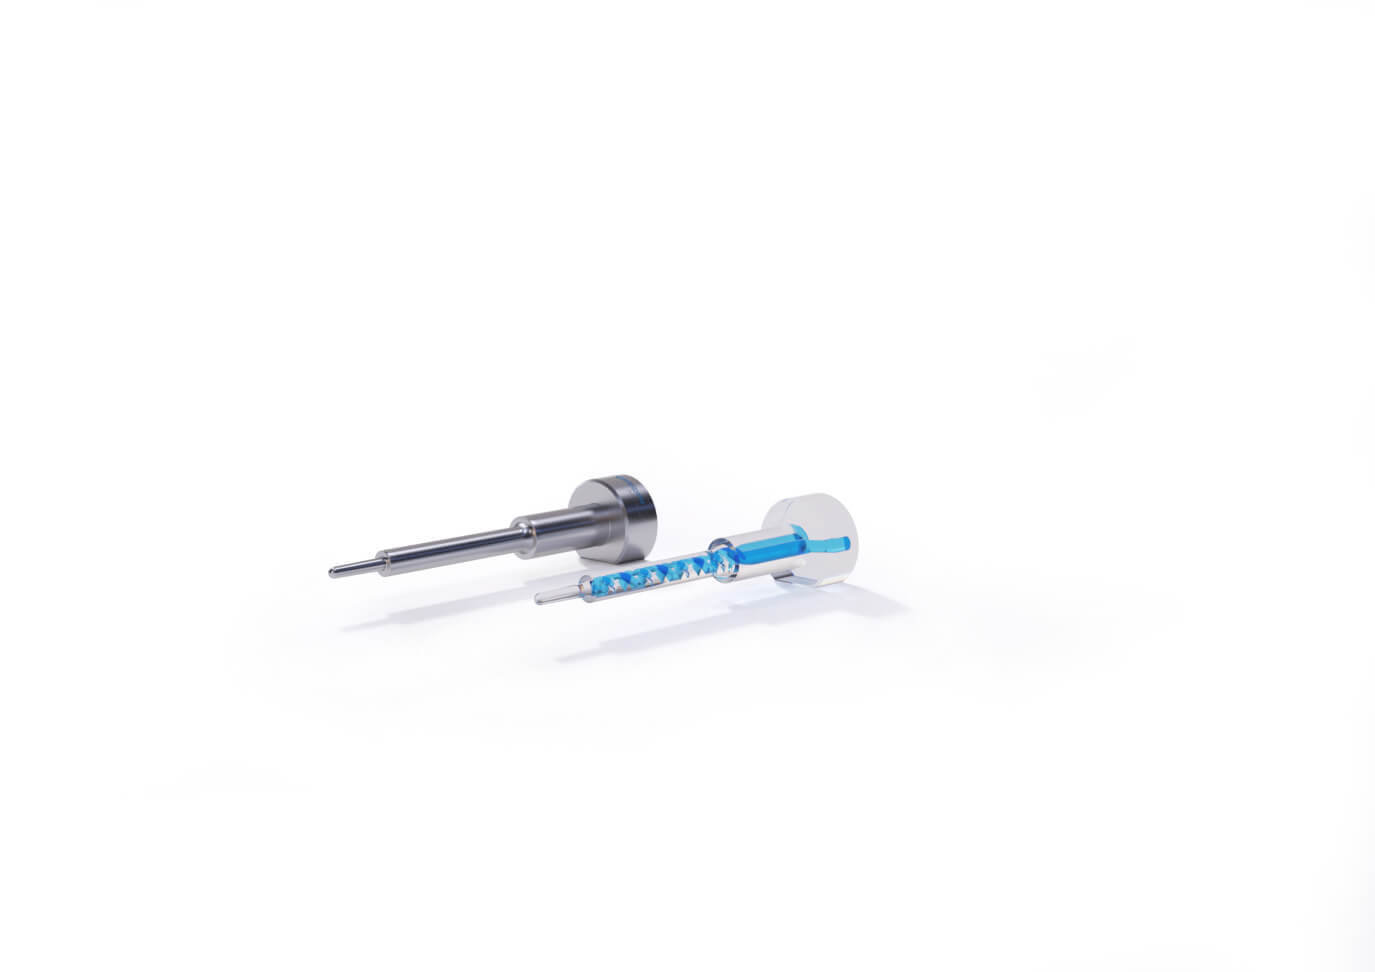 Inserts for syringes